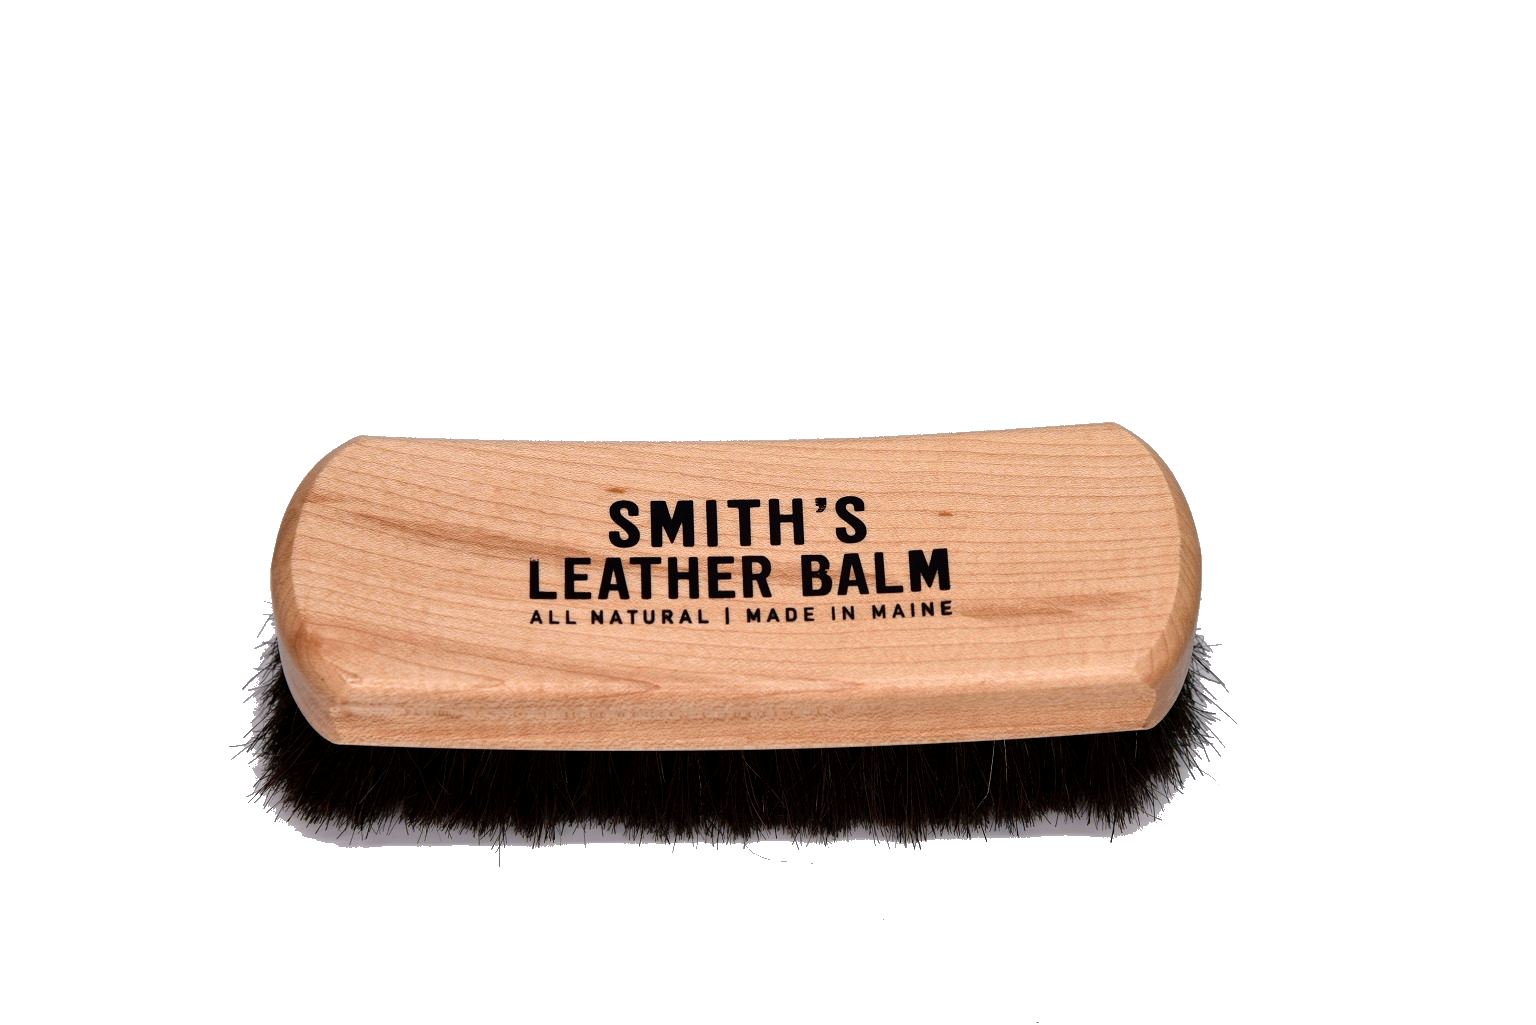 Horsehair Brush Leather